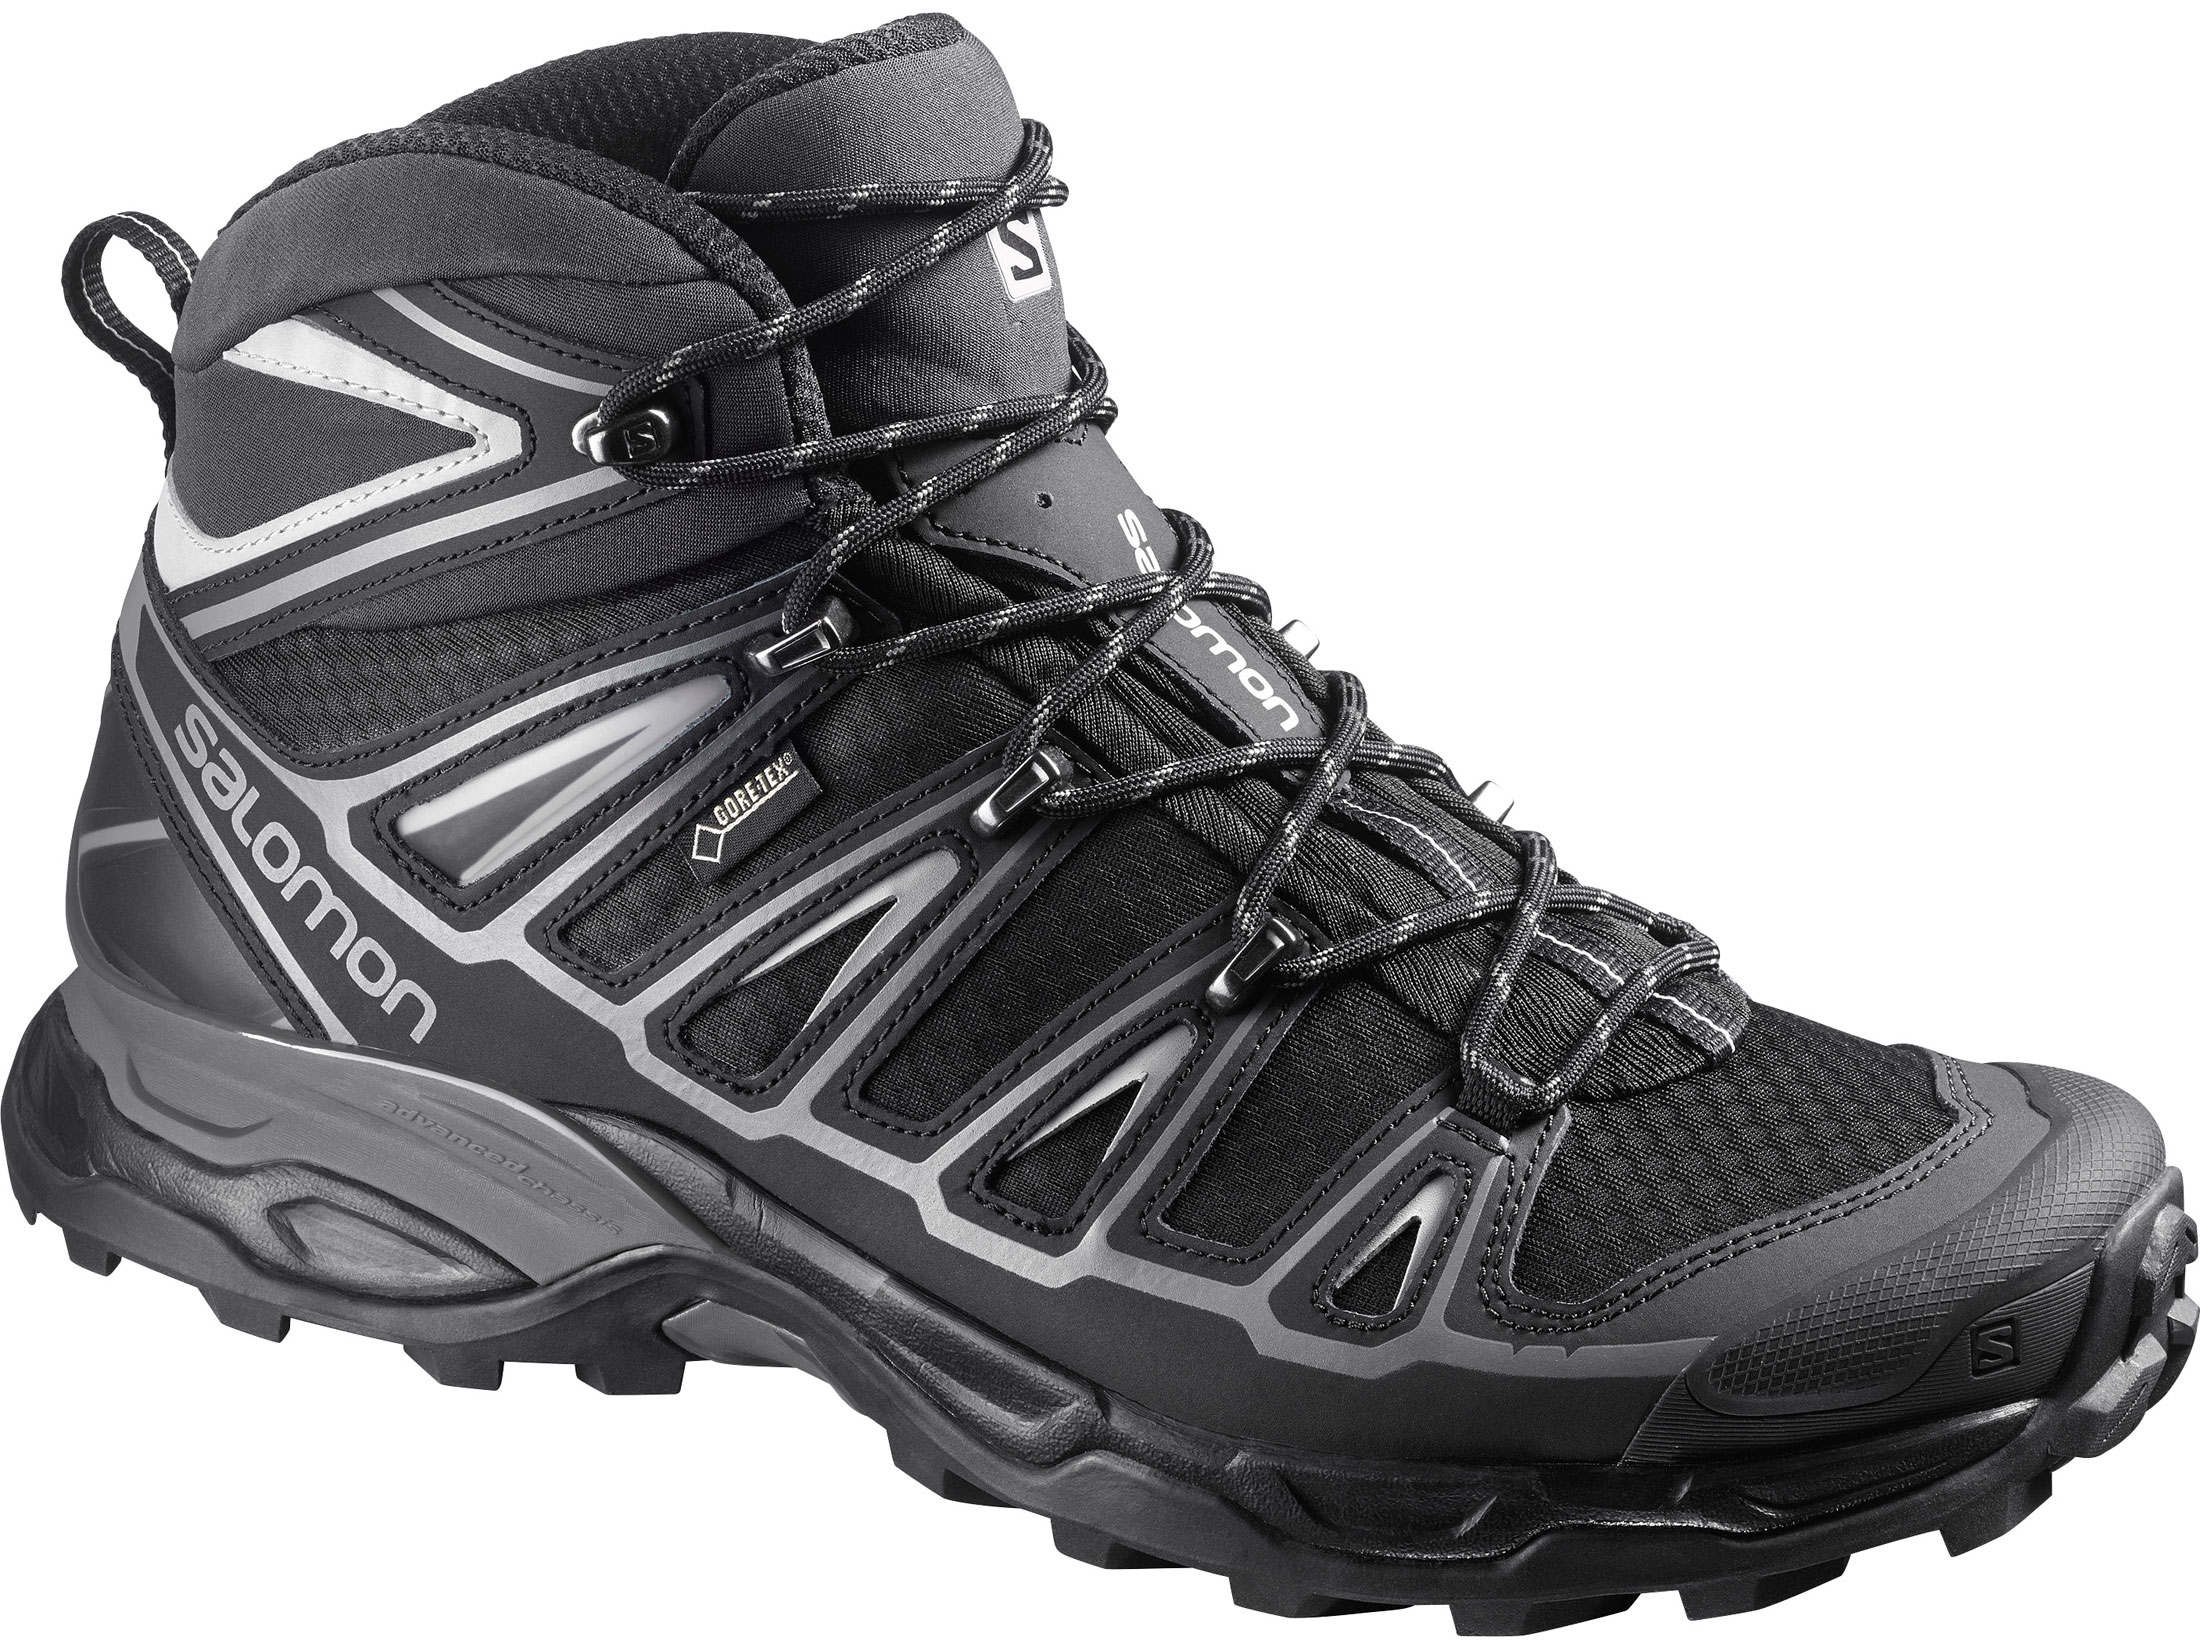 Salomon X Ultra Mid 2 GTX 6 GORE-TEX Hiking Boots Synthetic